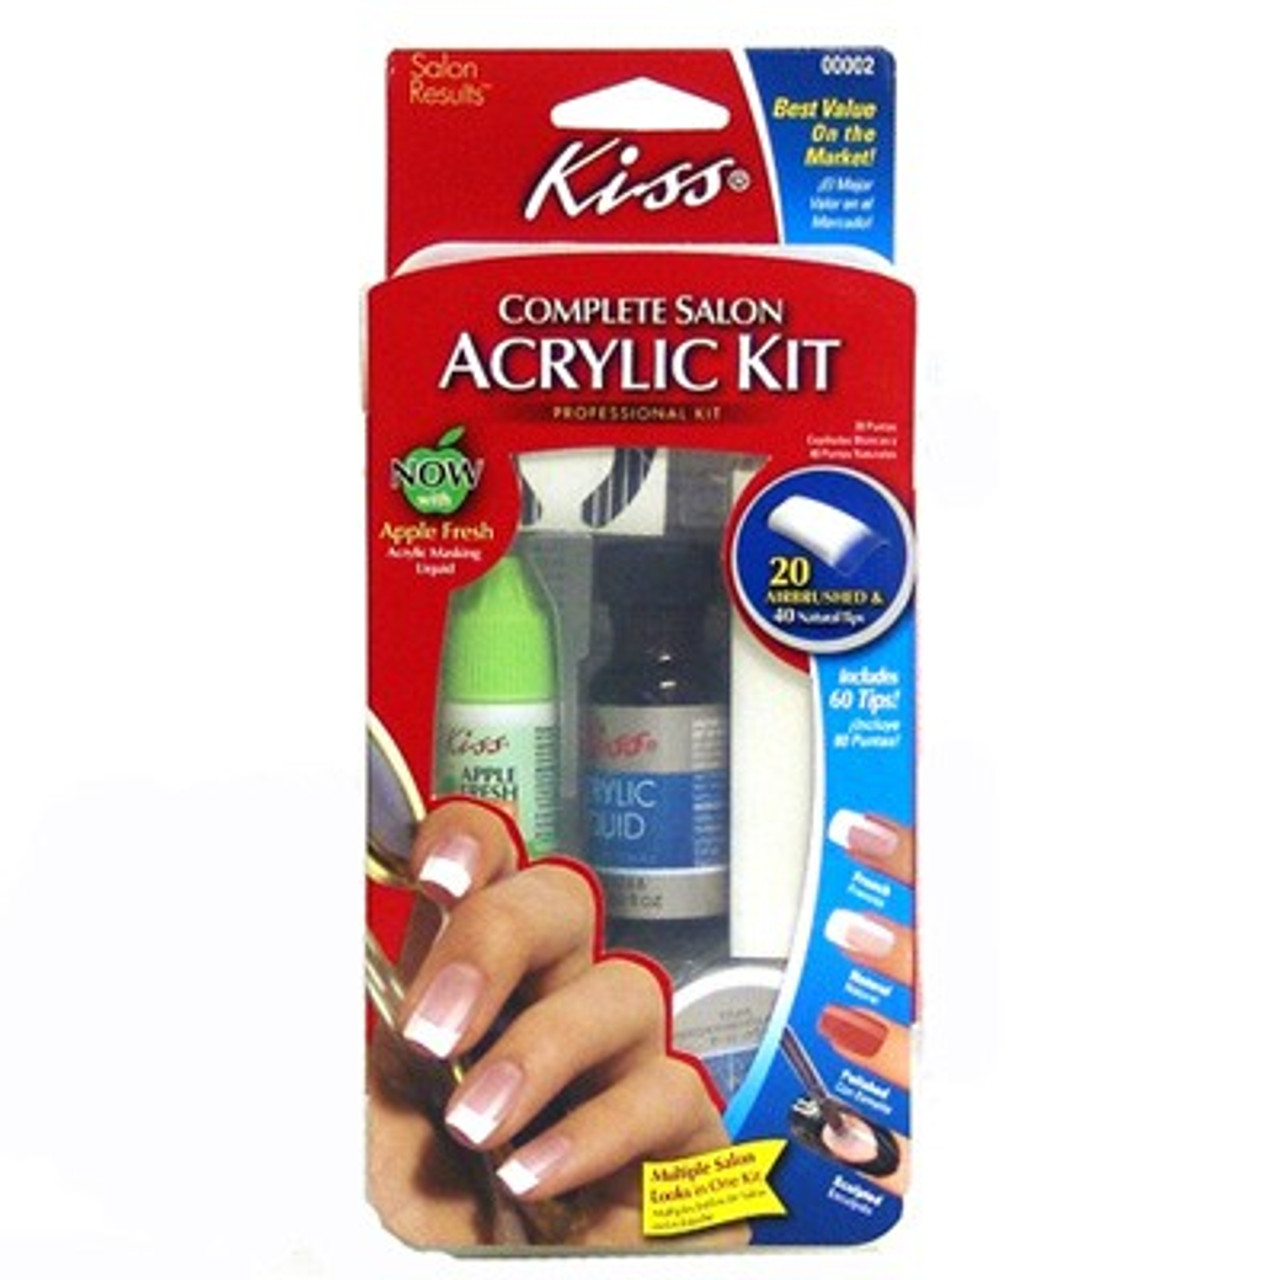 Kiss Acrylic Kit, Complete Salon